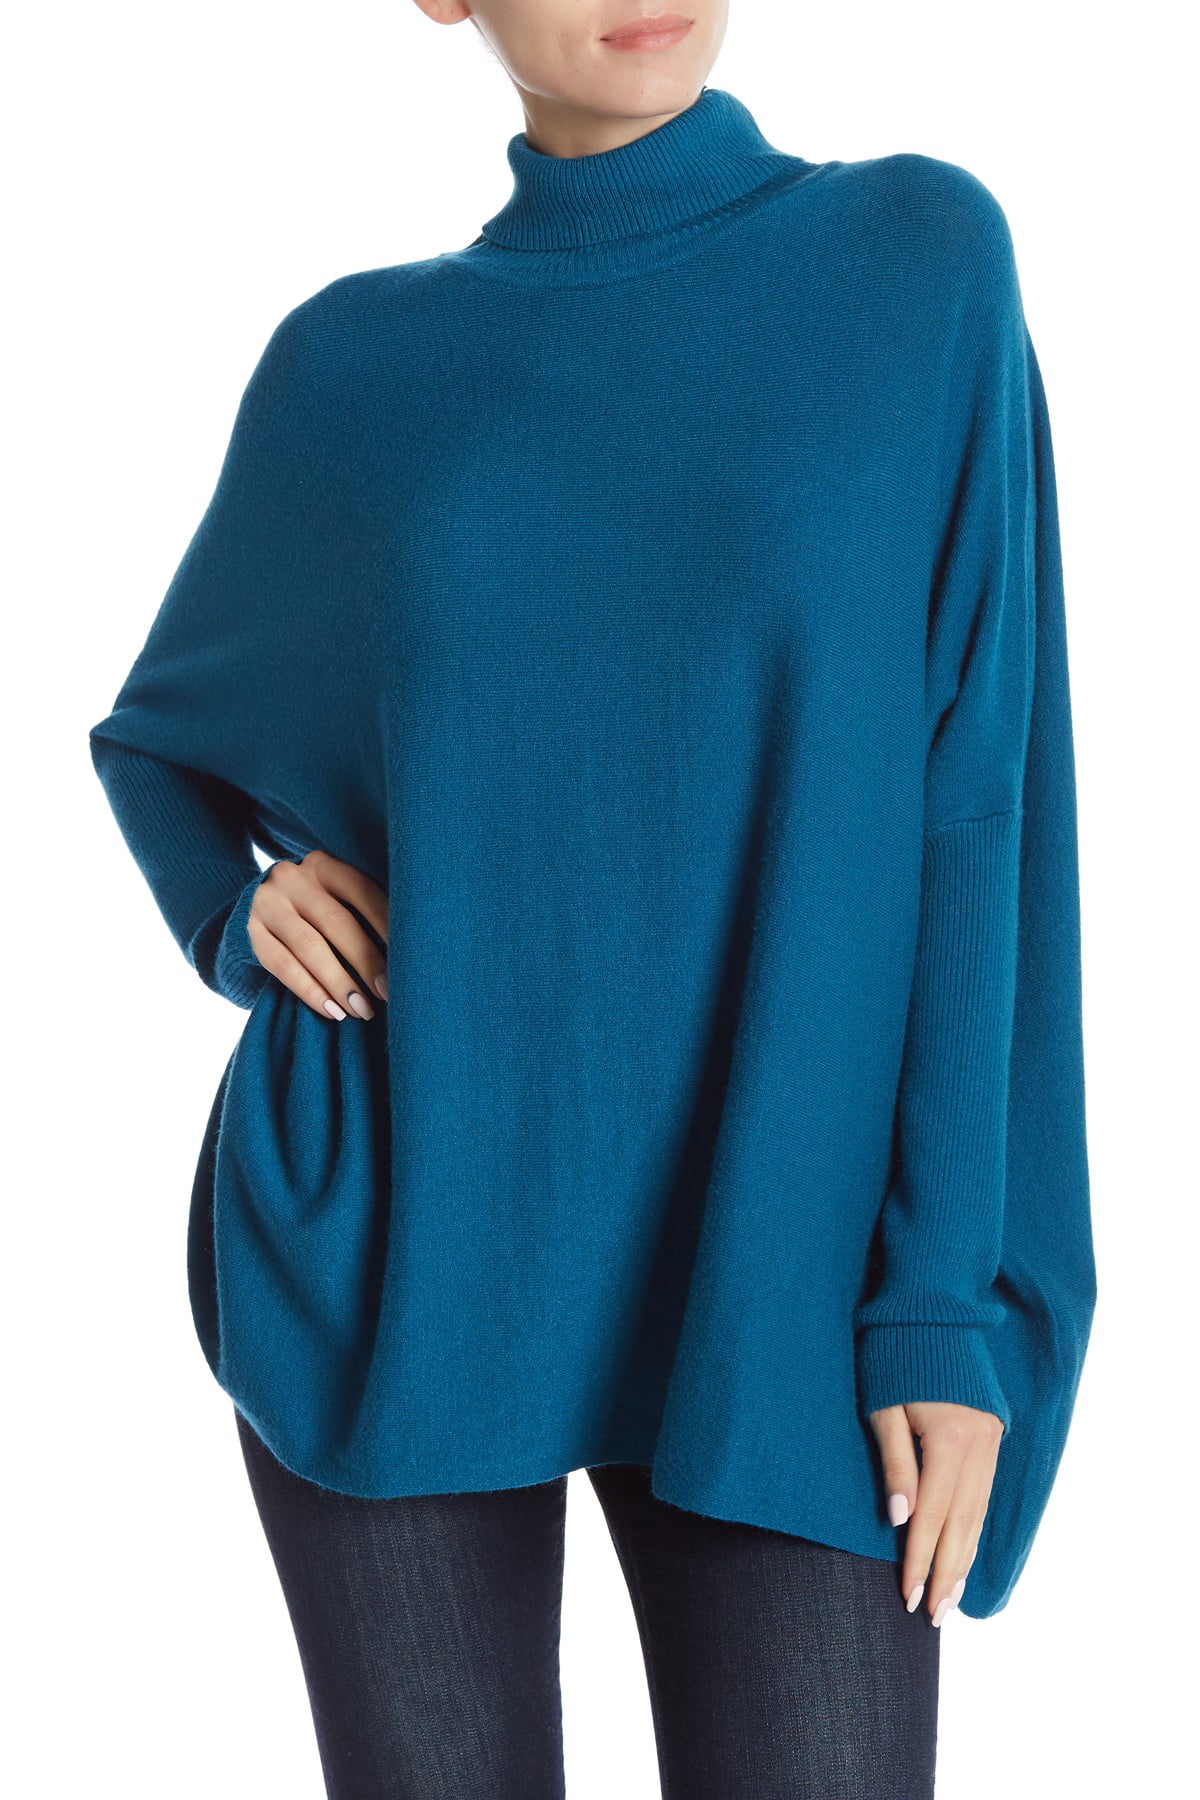 Joseph A - Womens Sweater Small Turtleneck Dolman Sleeve S - Walmart ...